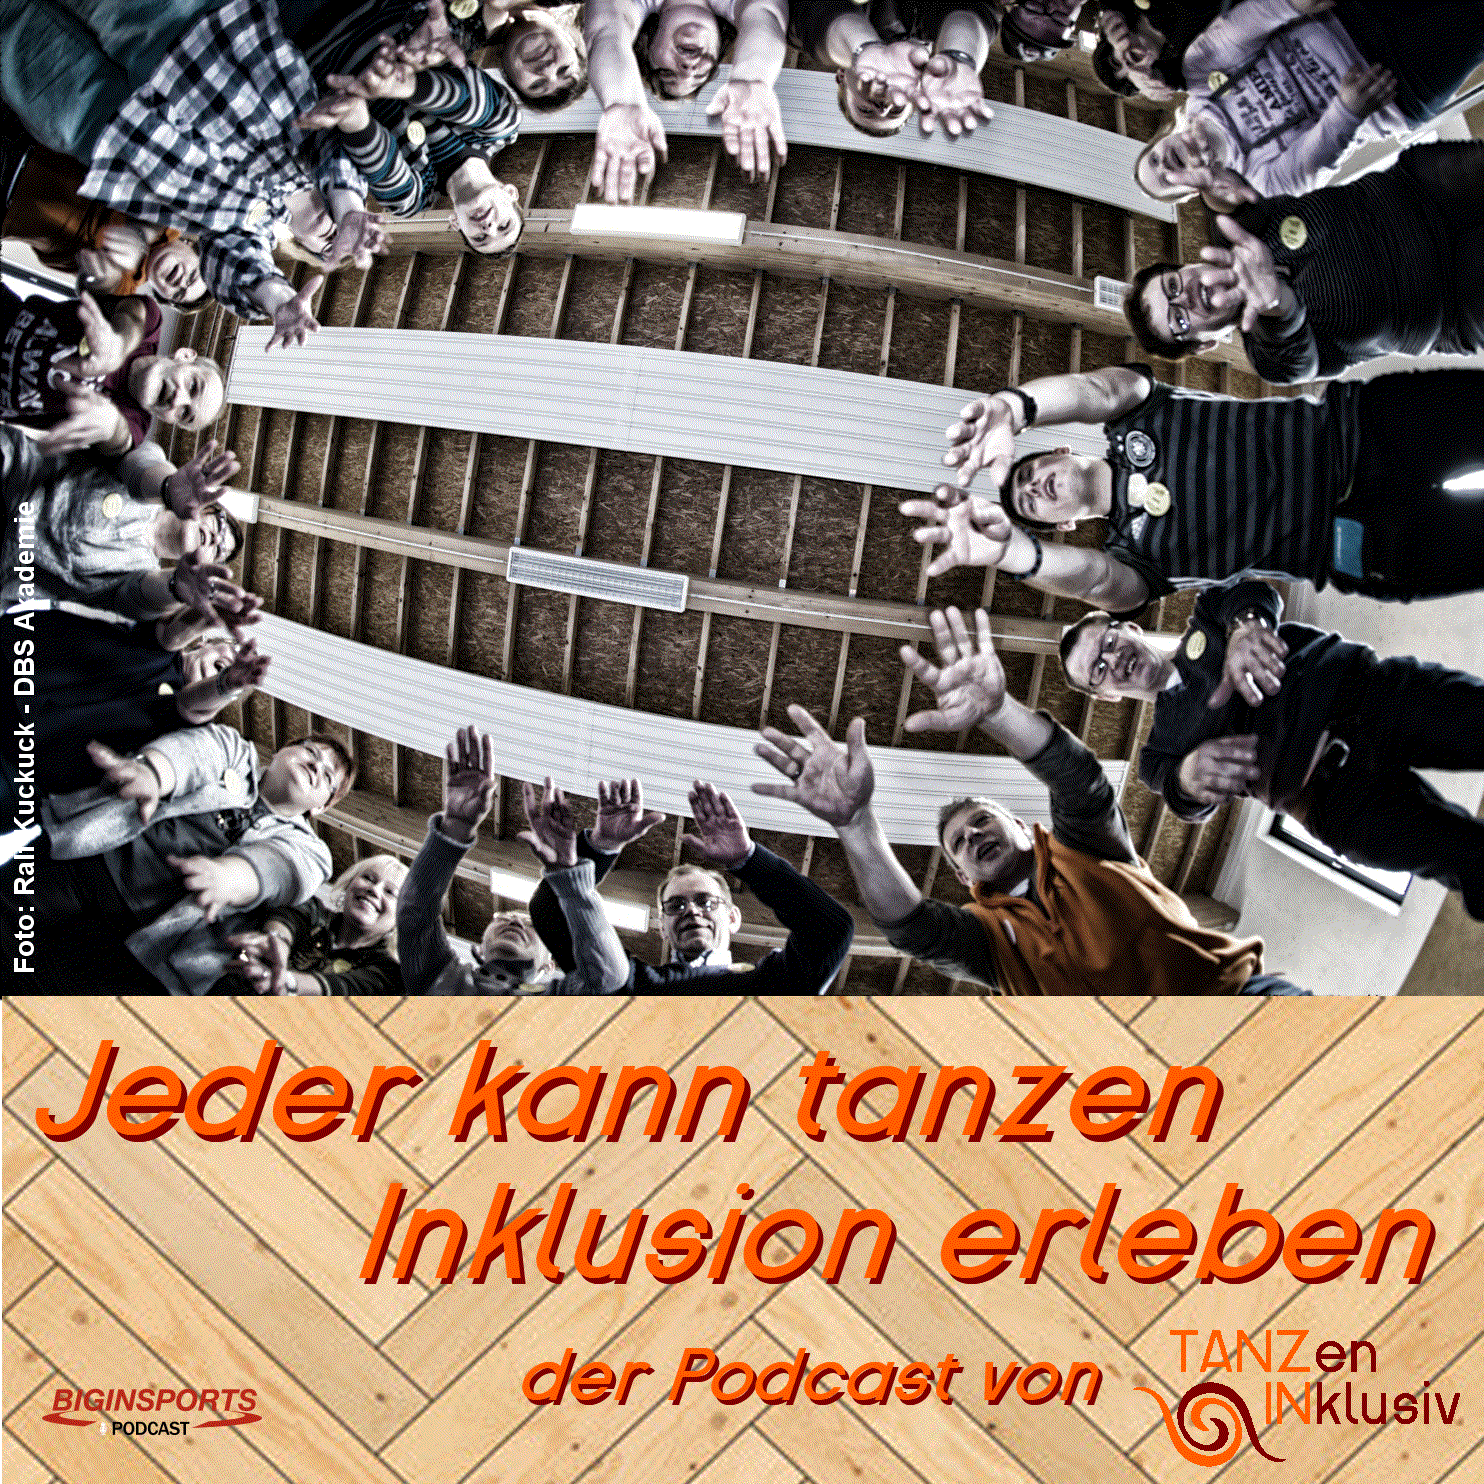 Read more about the article Jeder kann tanzen Podcast – Vorstellung BSG Gummersbach